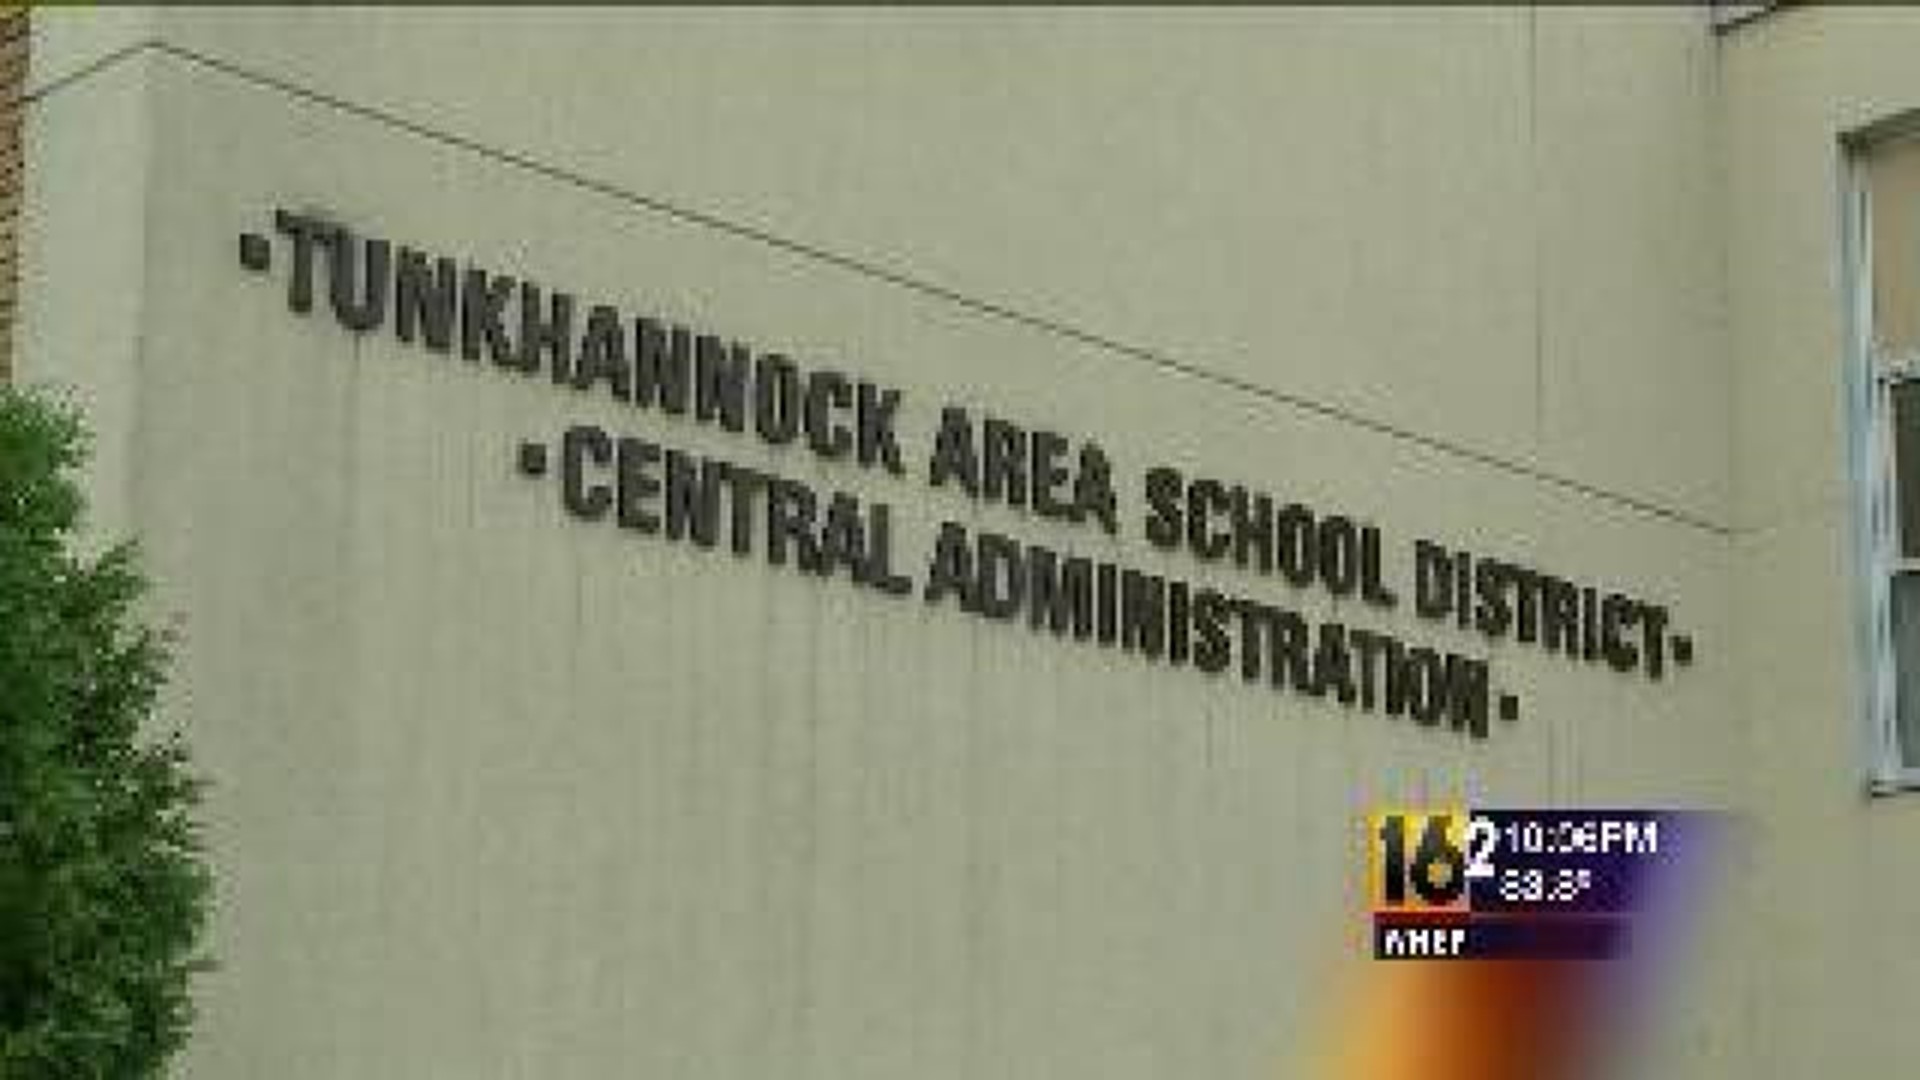 Director Calls Tunkhannock School Budget “Ludicrous” | wnep.com